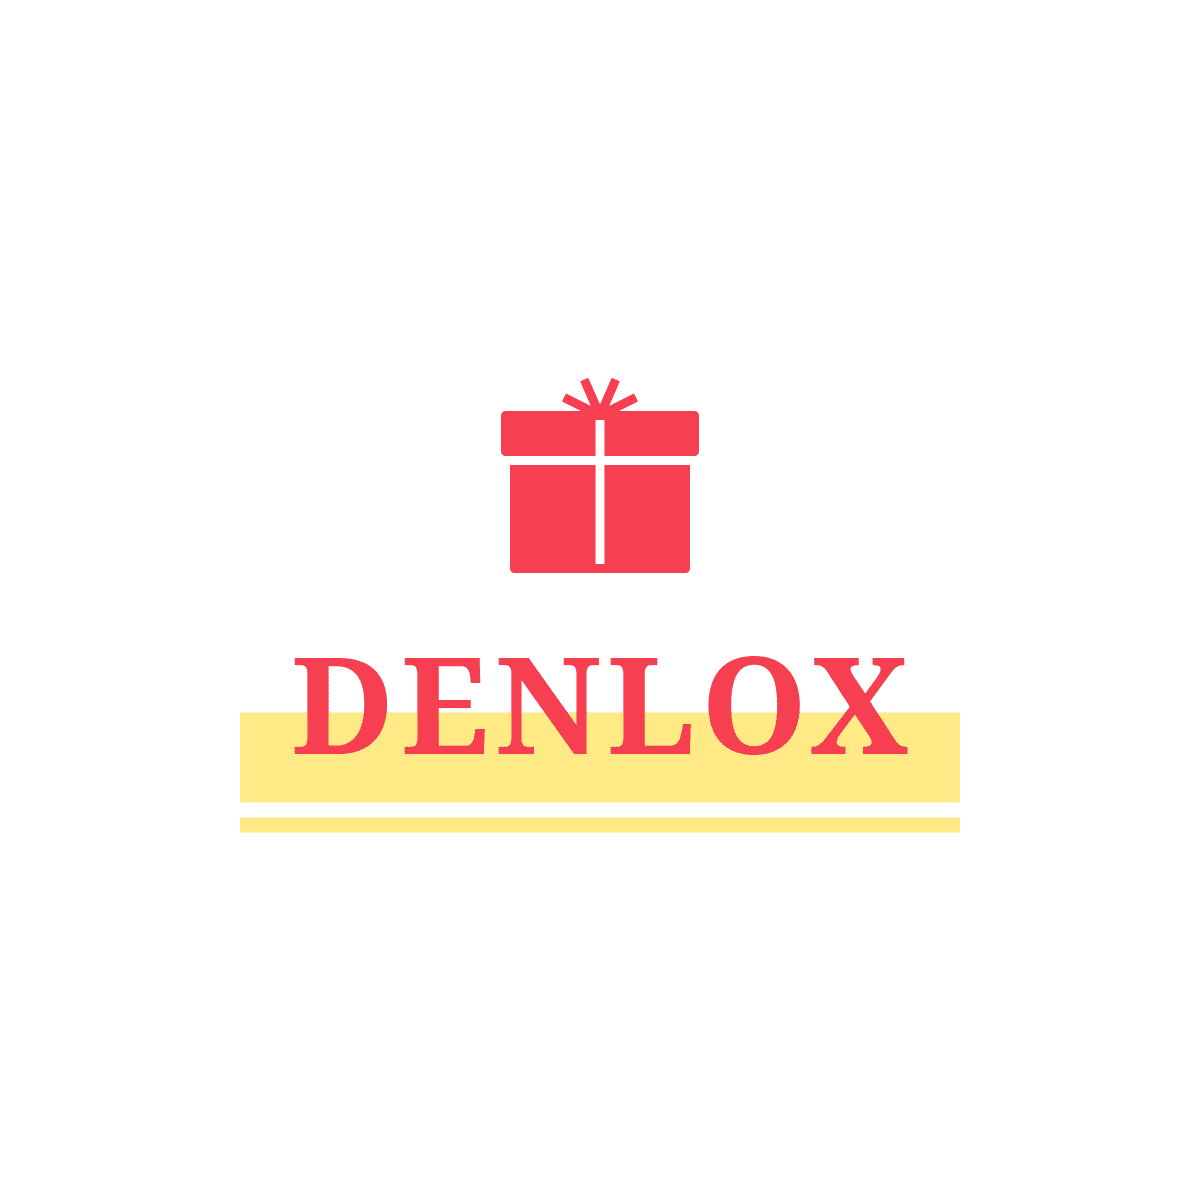 Denlox